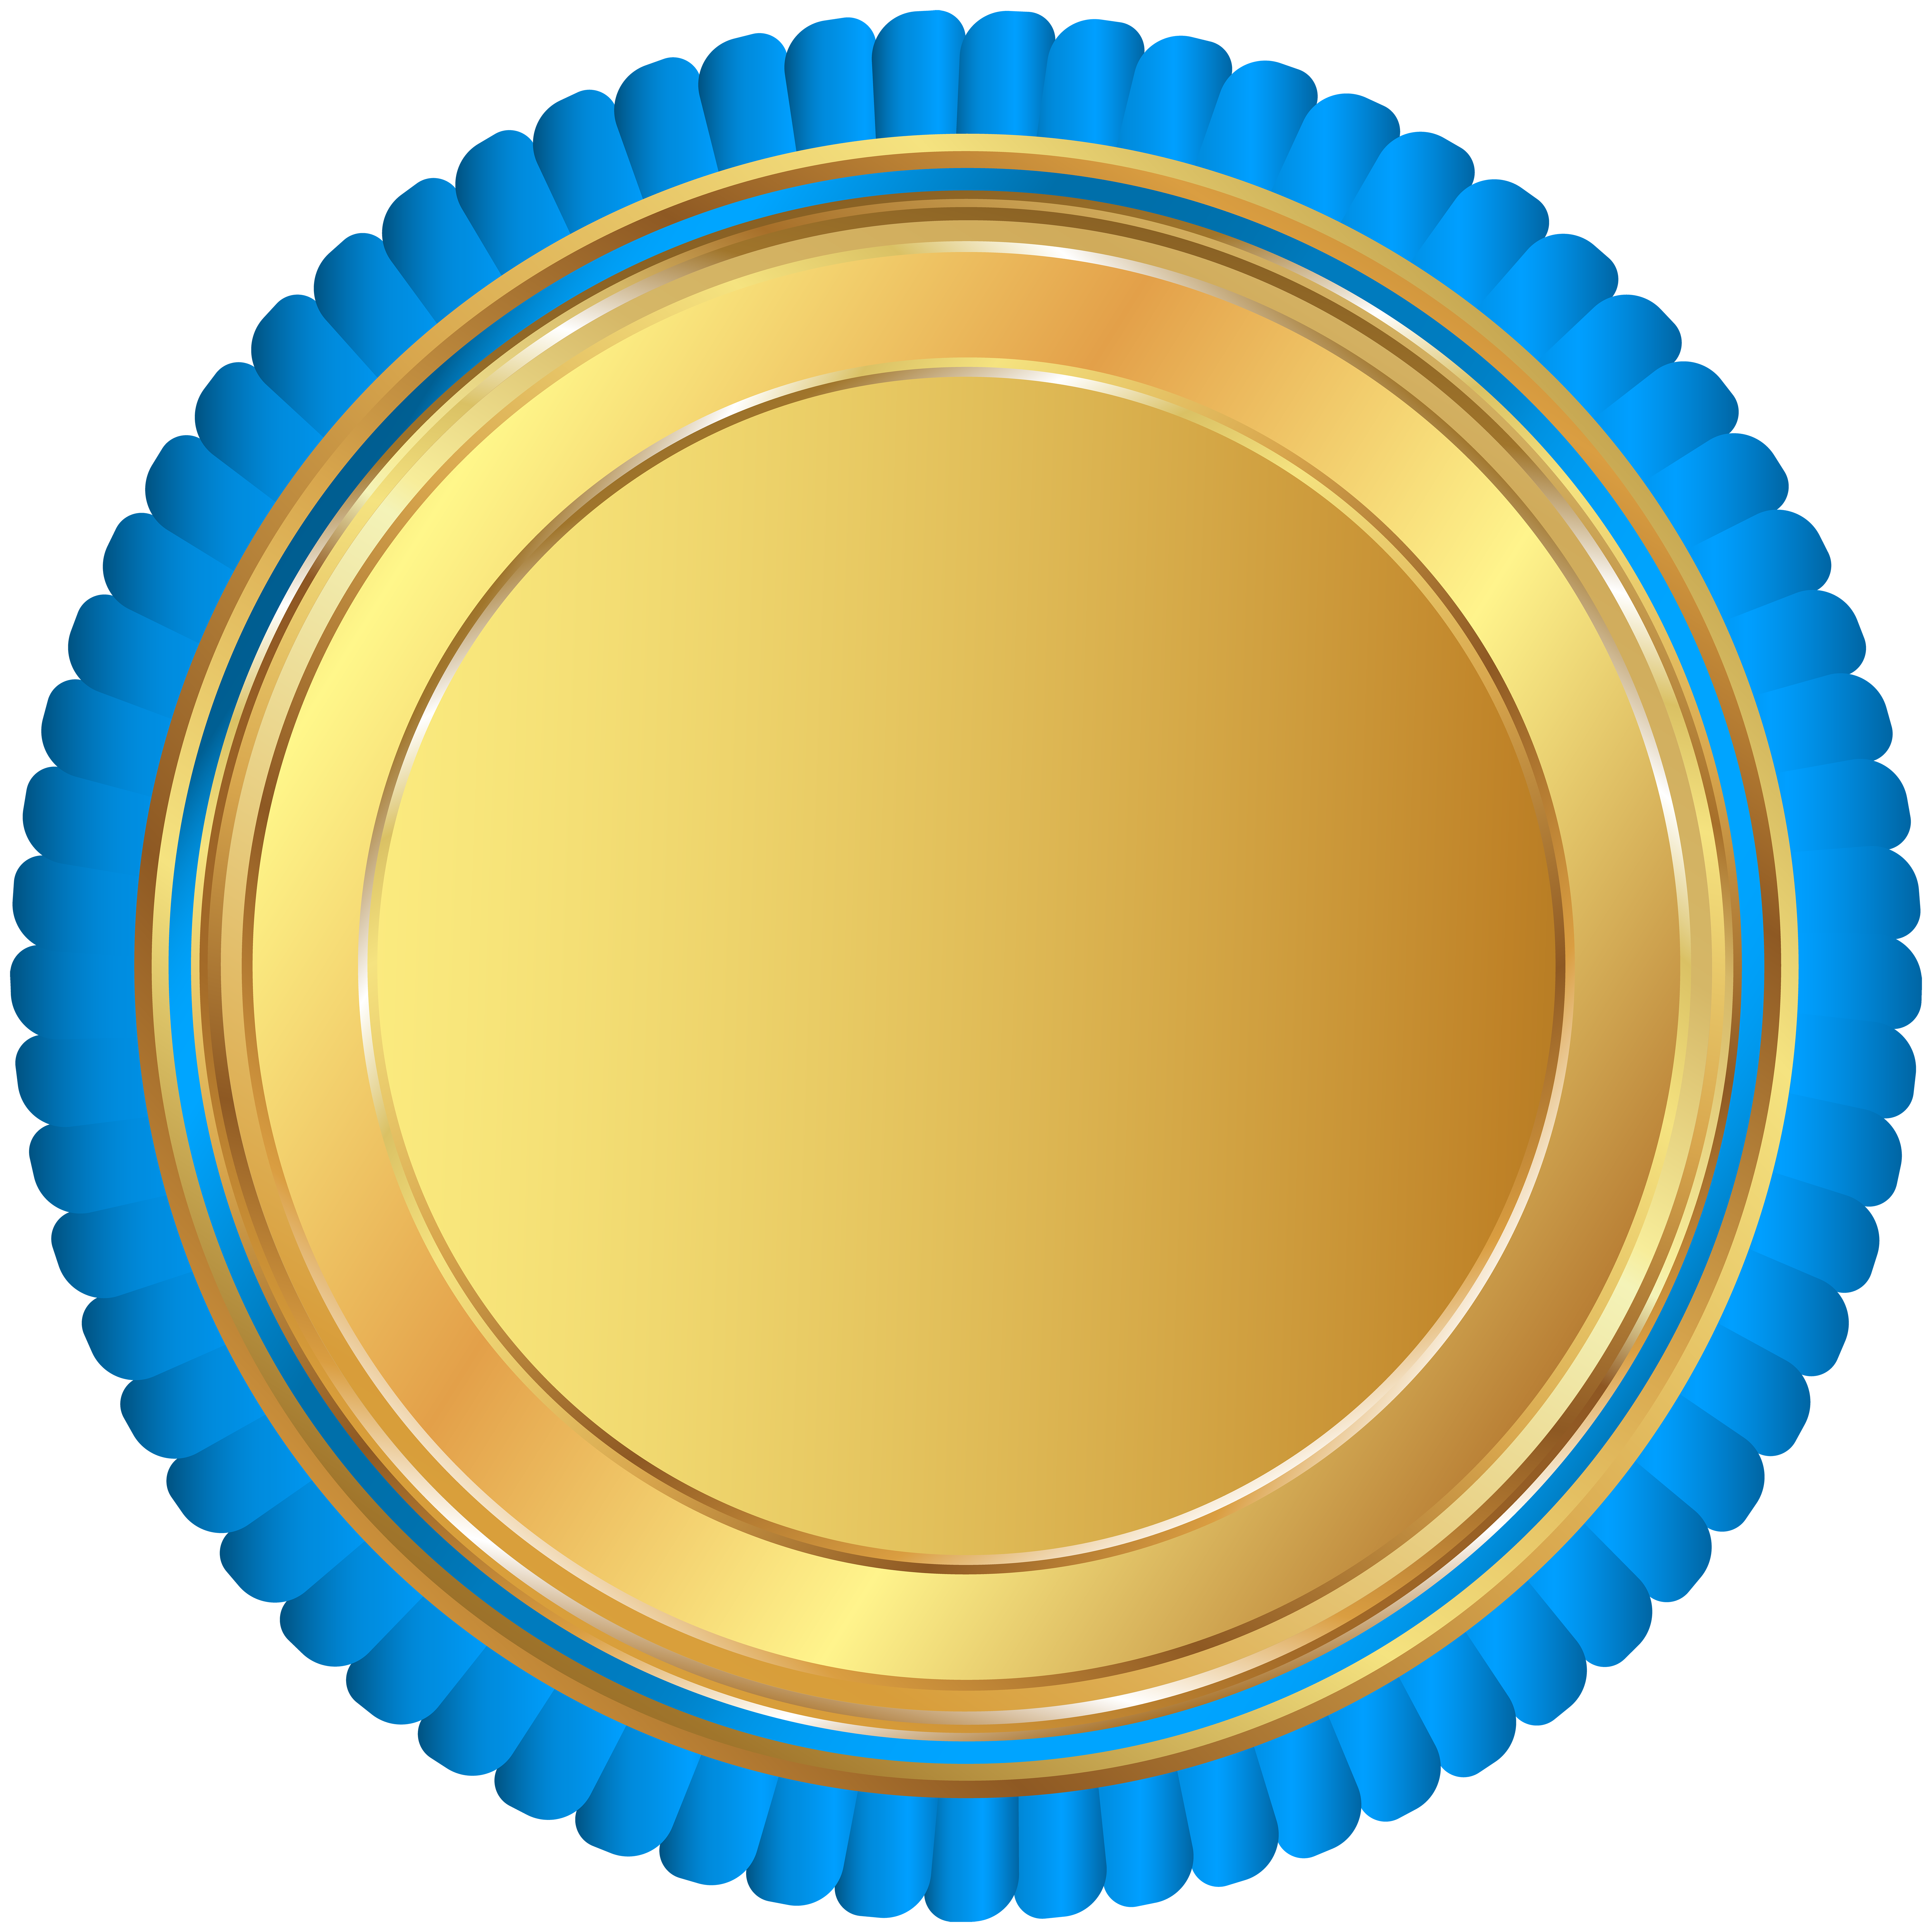 Gold Blue Seal Badge PNG Clip Art Image.